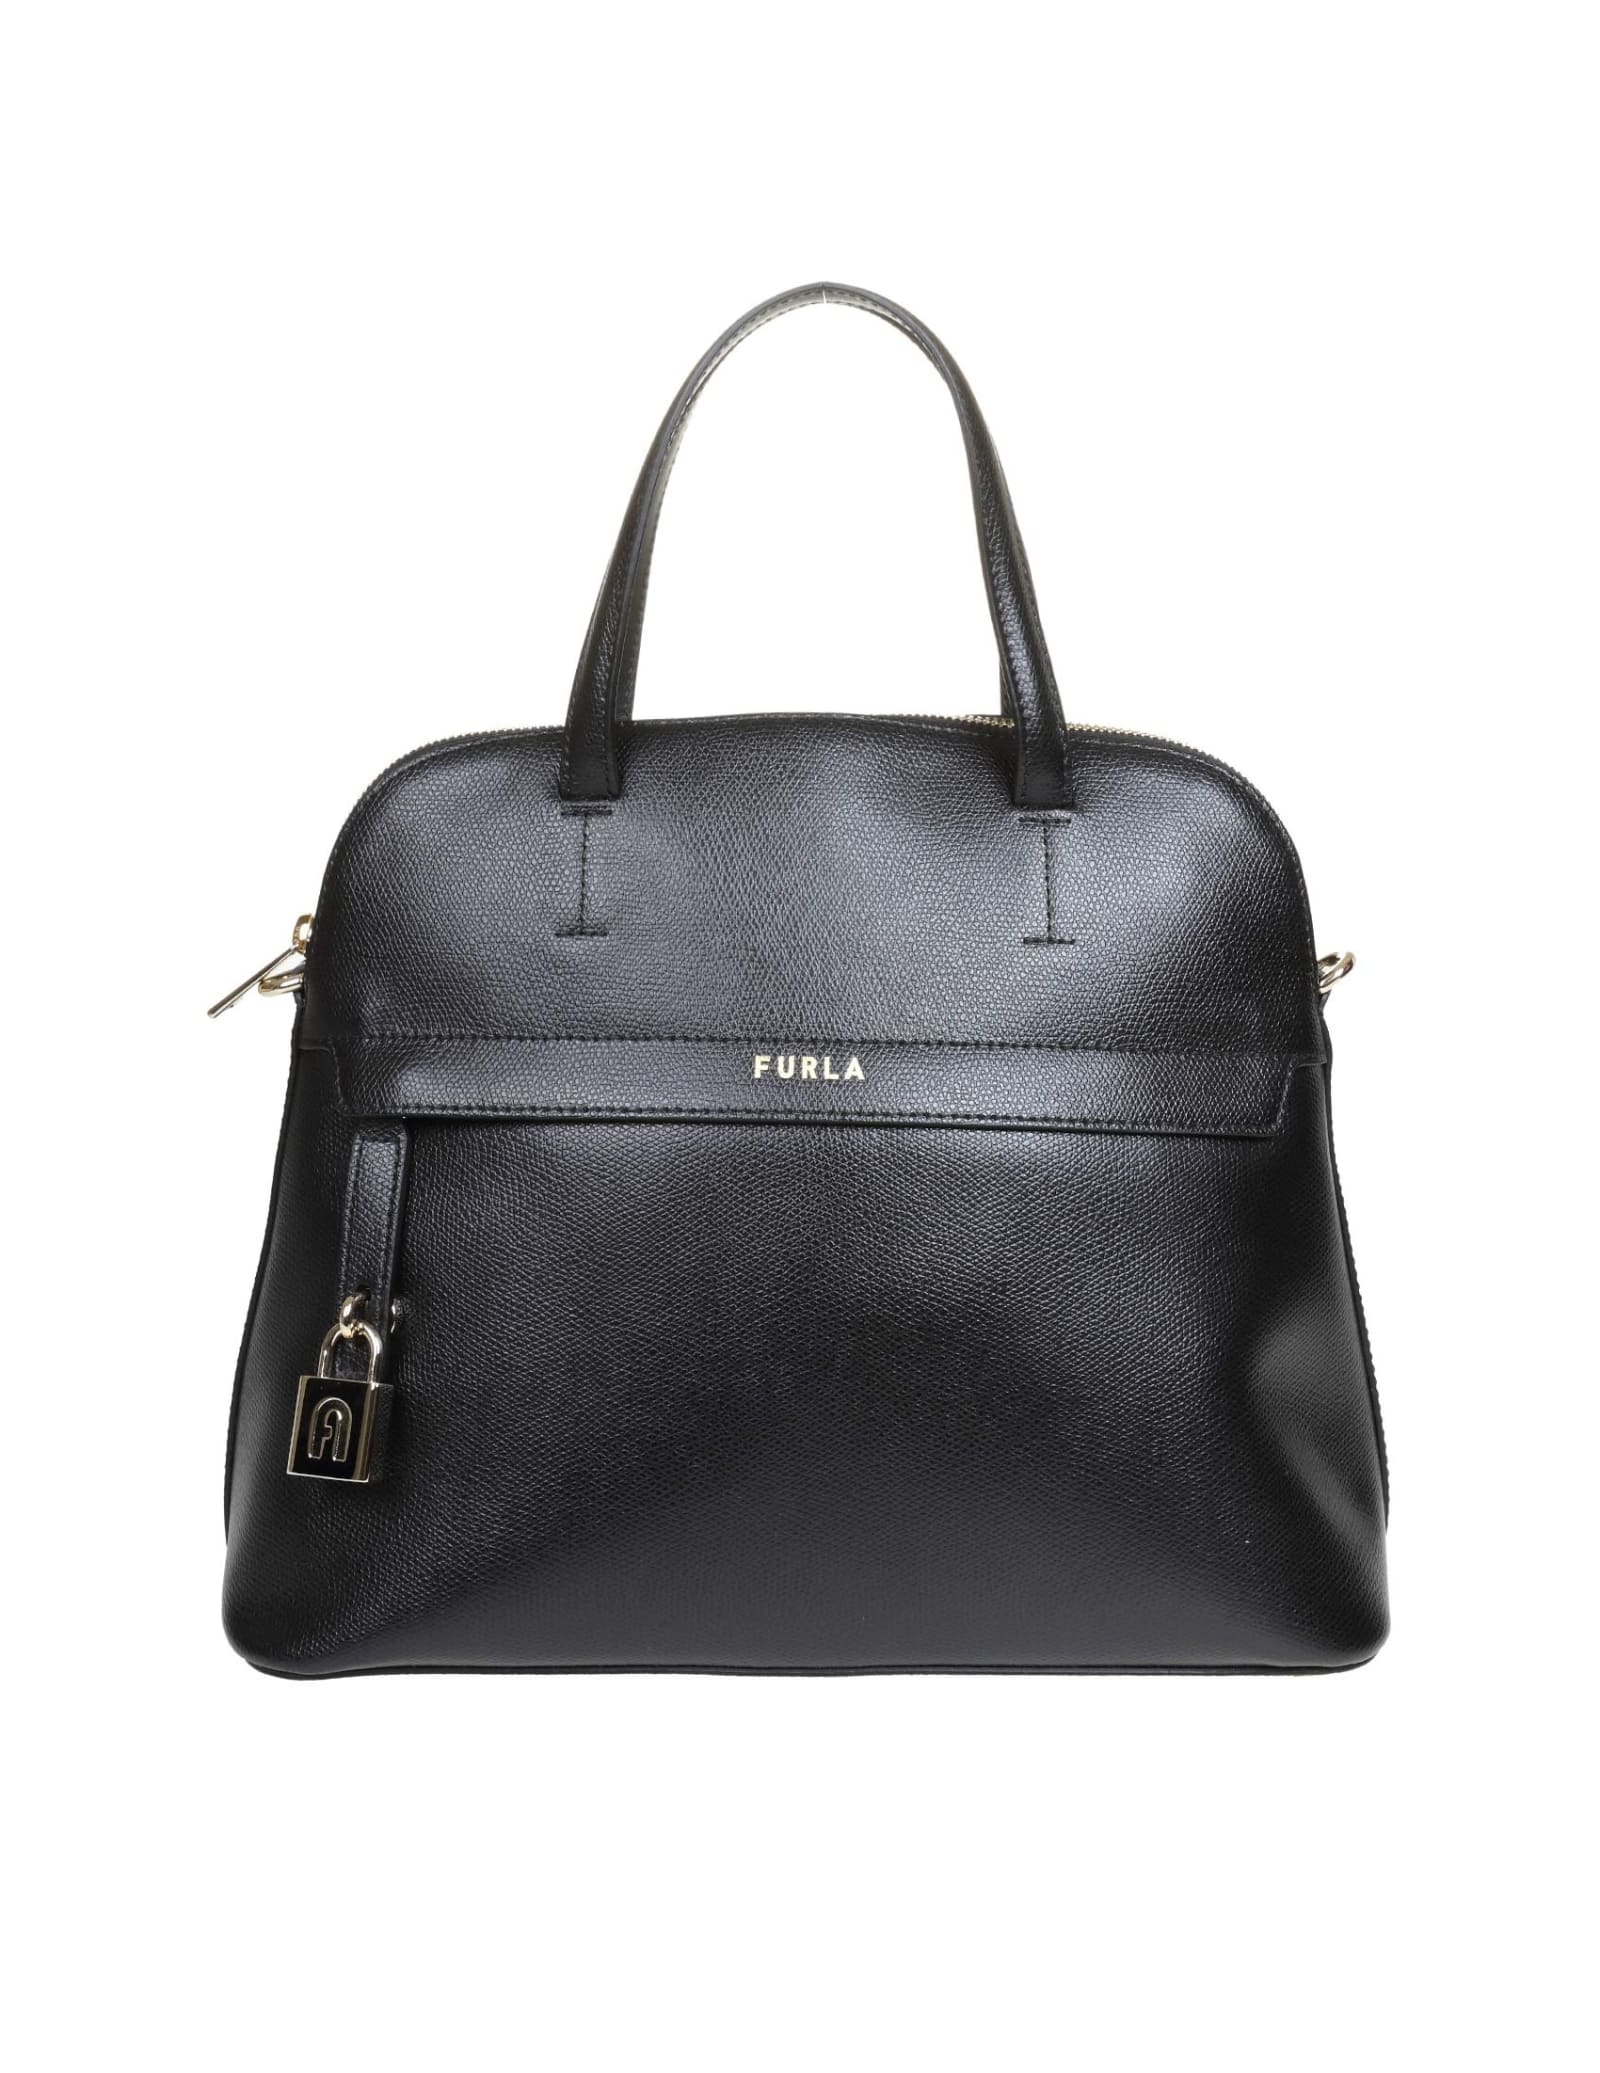 Furla Piper M Handbag In Black Leather